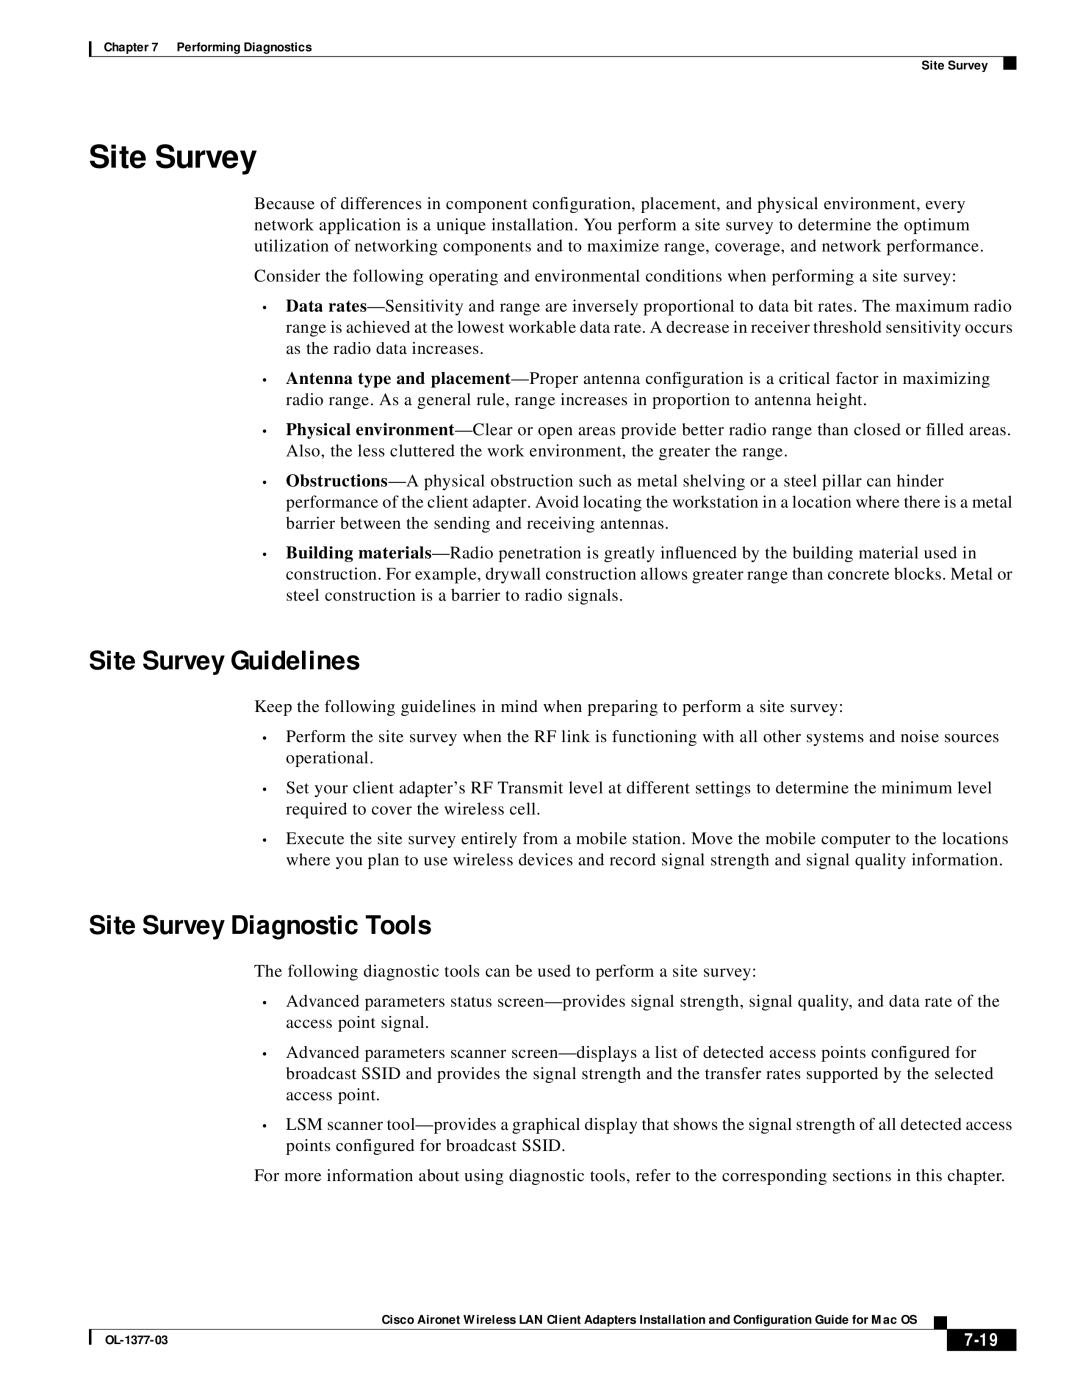 Cisco Systems OL-1377-03 manual Site Survey Guidelines, Site Survey Diagnostic Tools, 7-19 